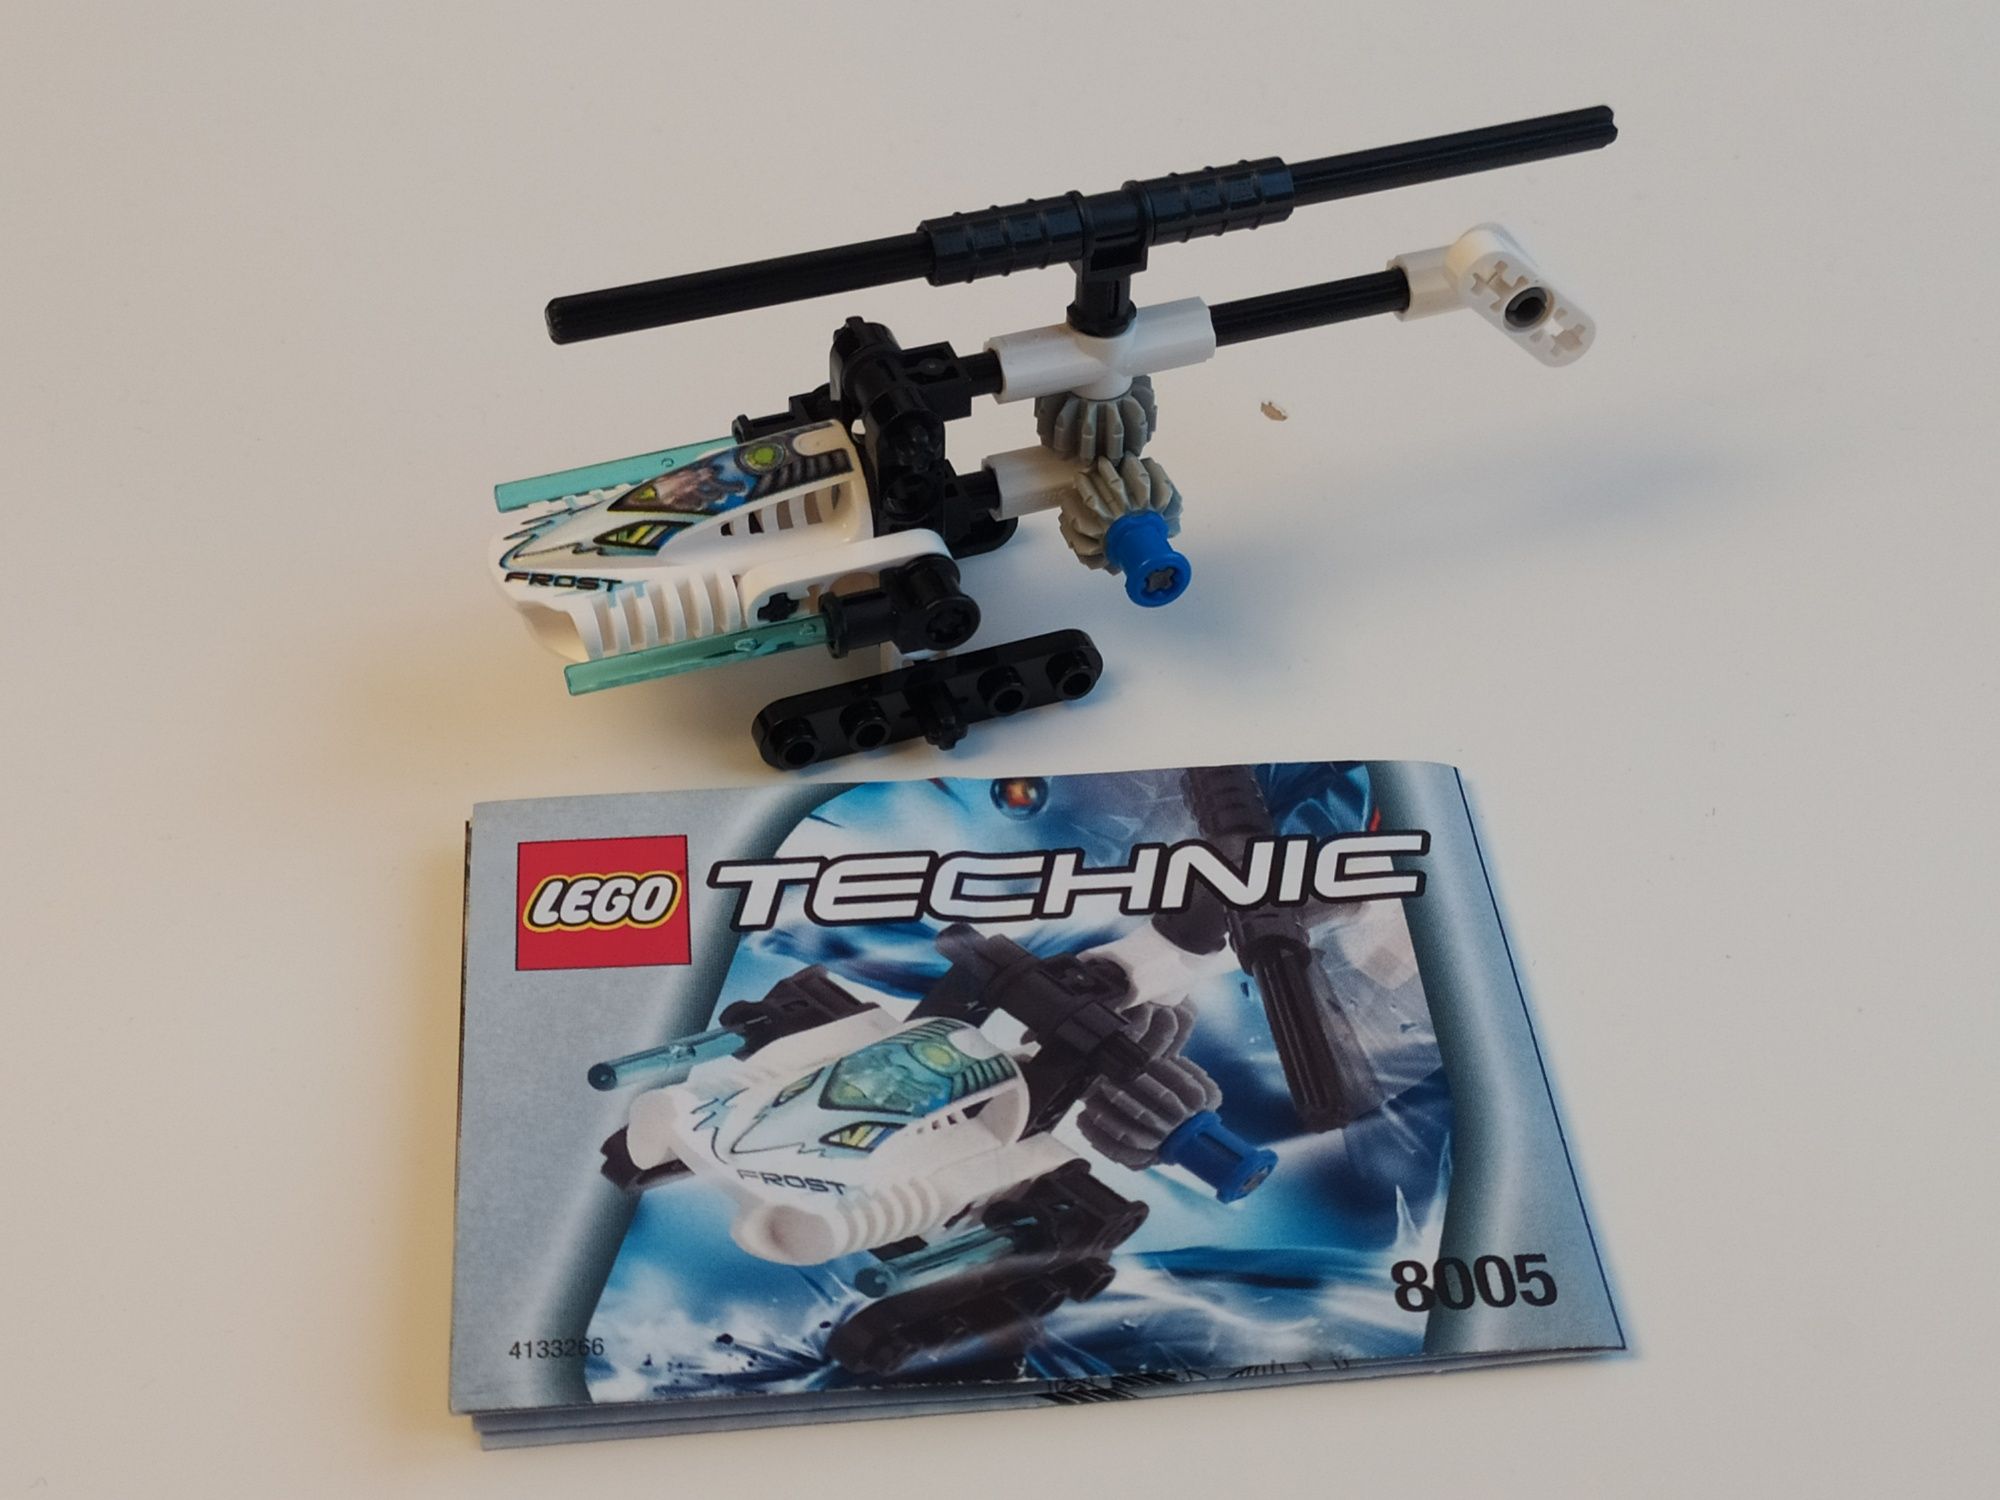 LEGO Technic 8005